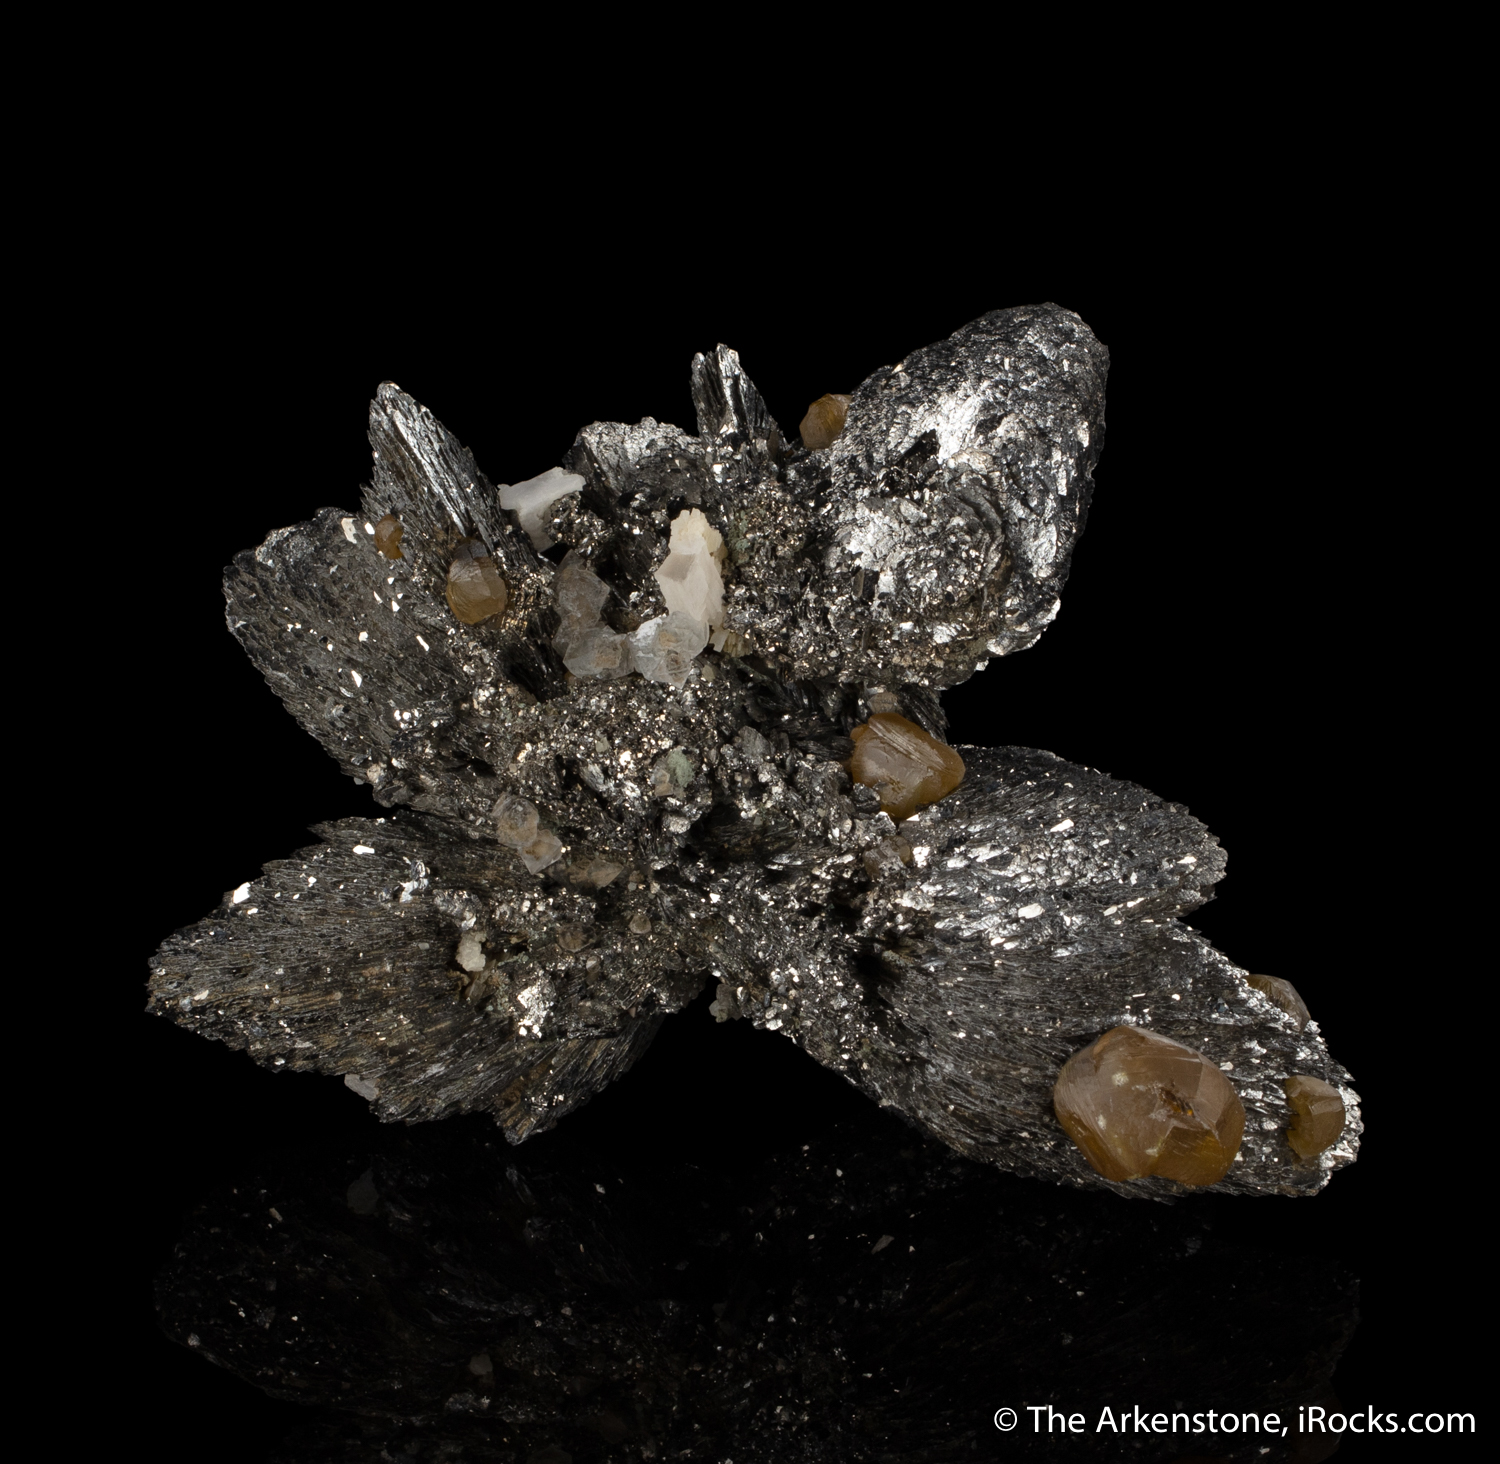 Rhinestone - Iridescent Crystals - Varsity Shop